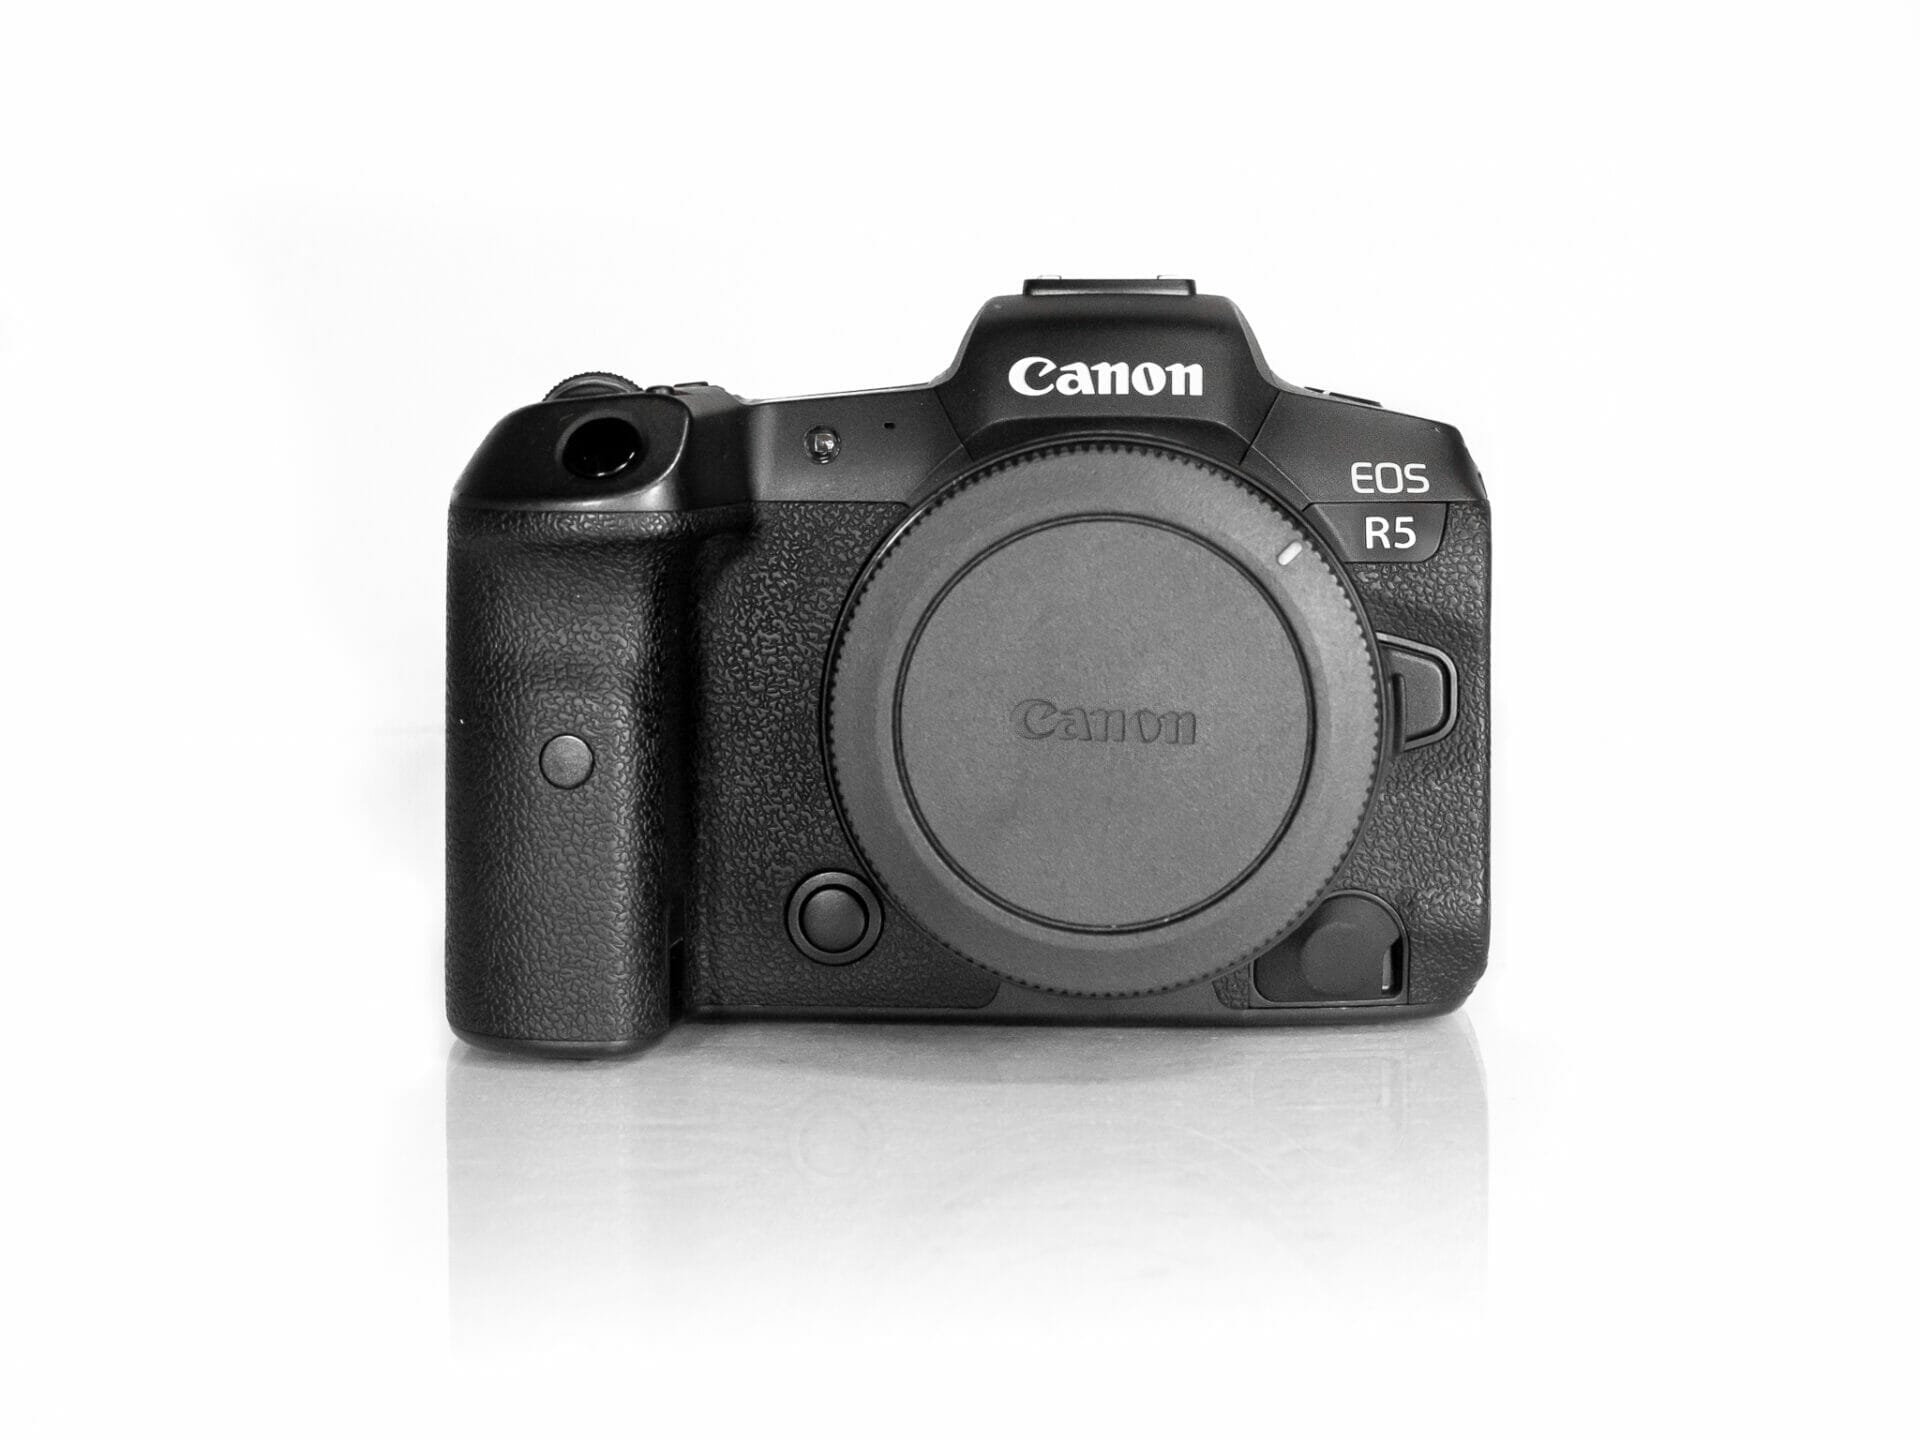 Camera gear essentials Canon R5 Mirrorless Camera 